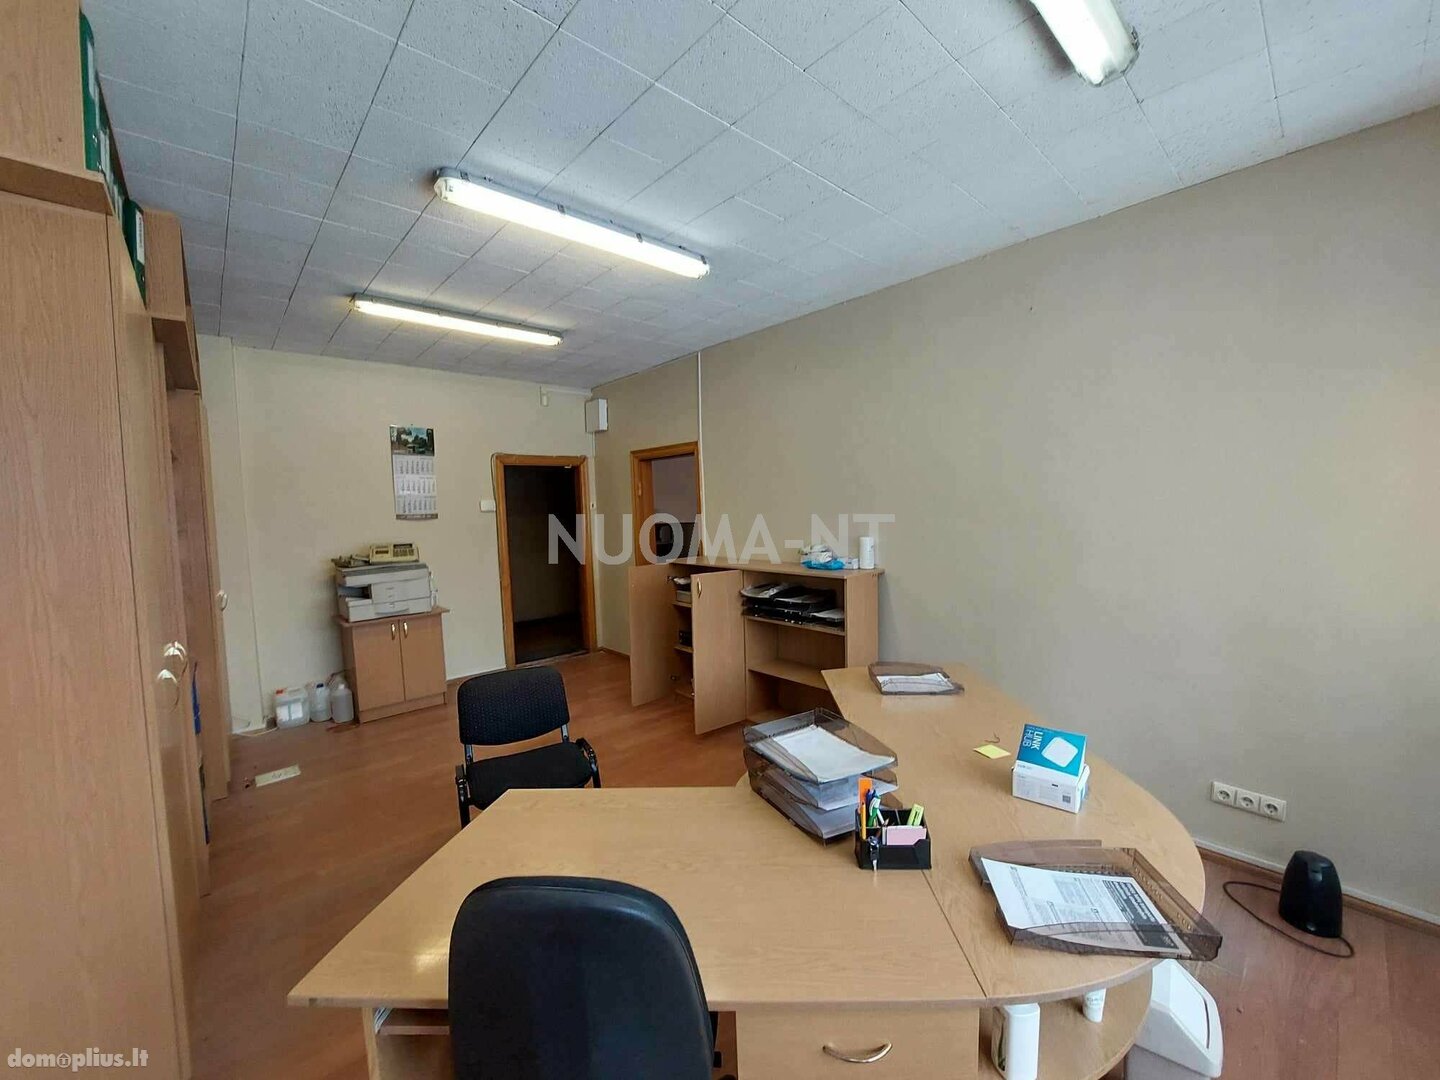 Office / Commercial/service / Other Premises for rent Kaune, Dainavoje, Taikos pr.